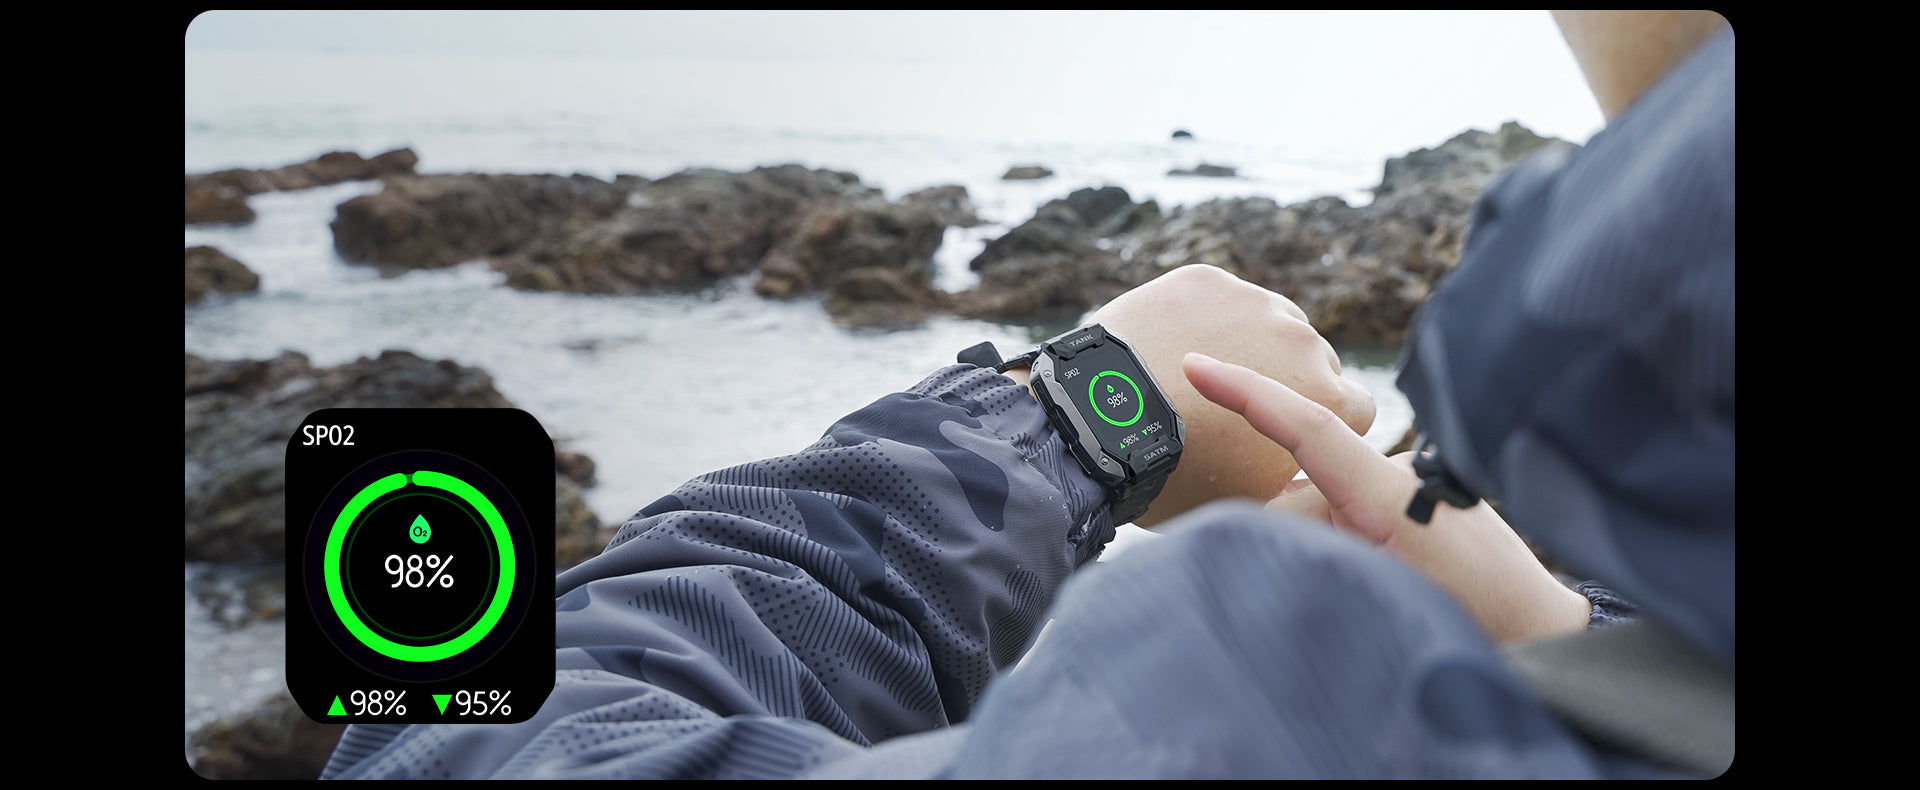 KOSPET TANK M1 Rugged Smartwatch support blood oxygen monitor